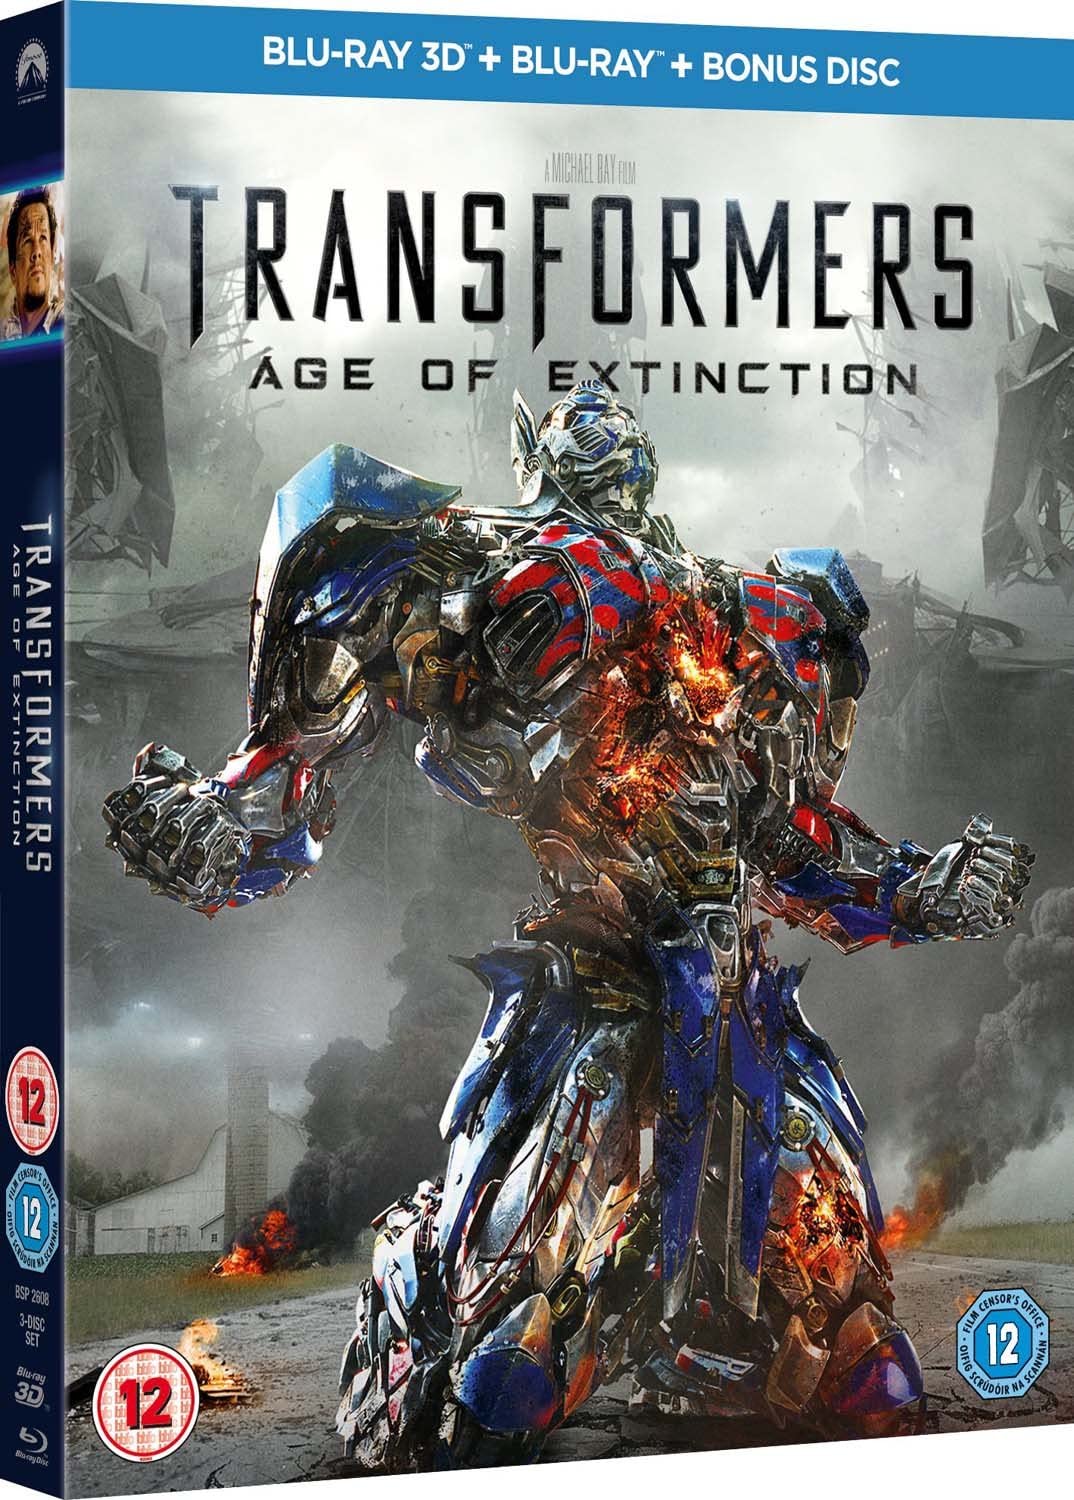 Transformers: Age of Extinction [Blu-ray 3D + Blu-ray + Bonus Disc] [Regiovrij]